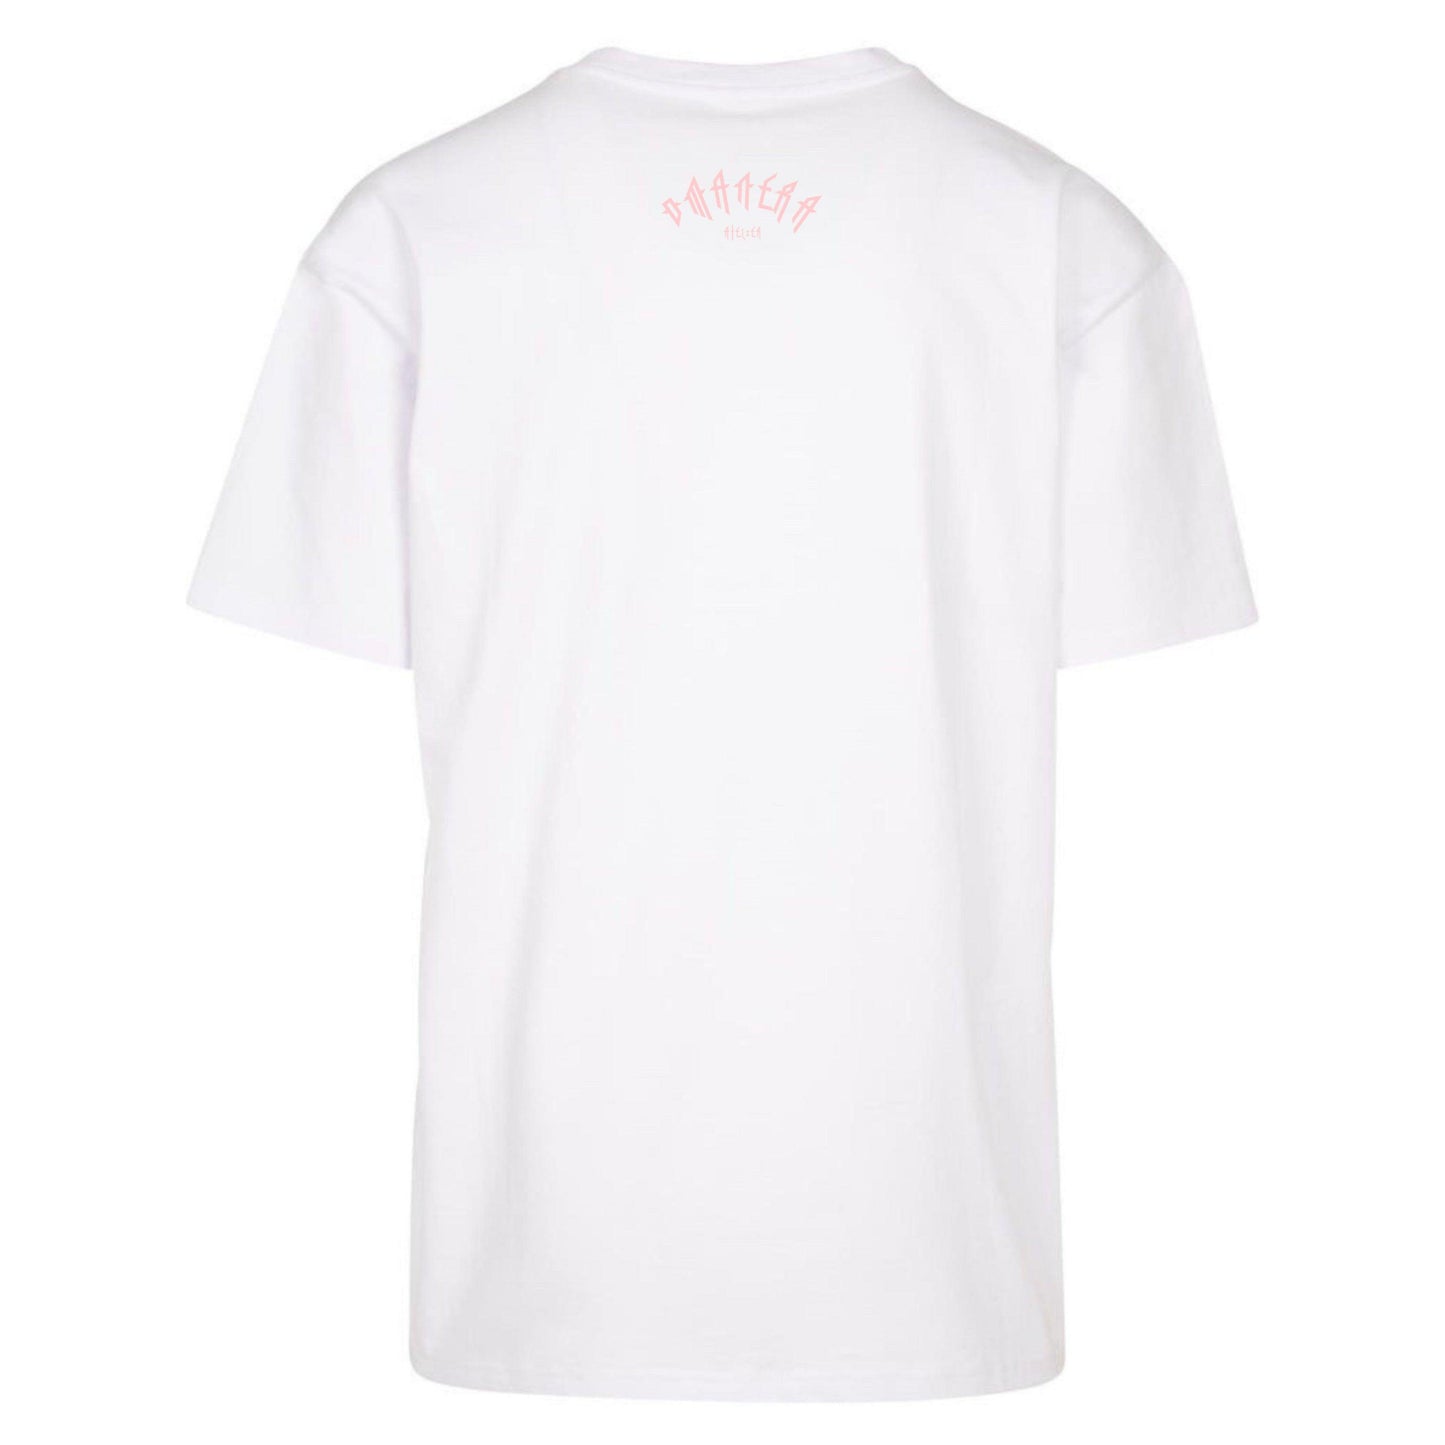 Oversize Shirt White/Rosé 240 g/m² - DMANERA Atelier